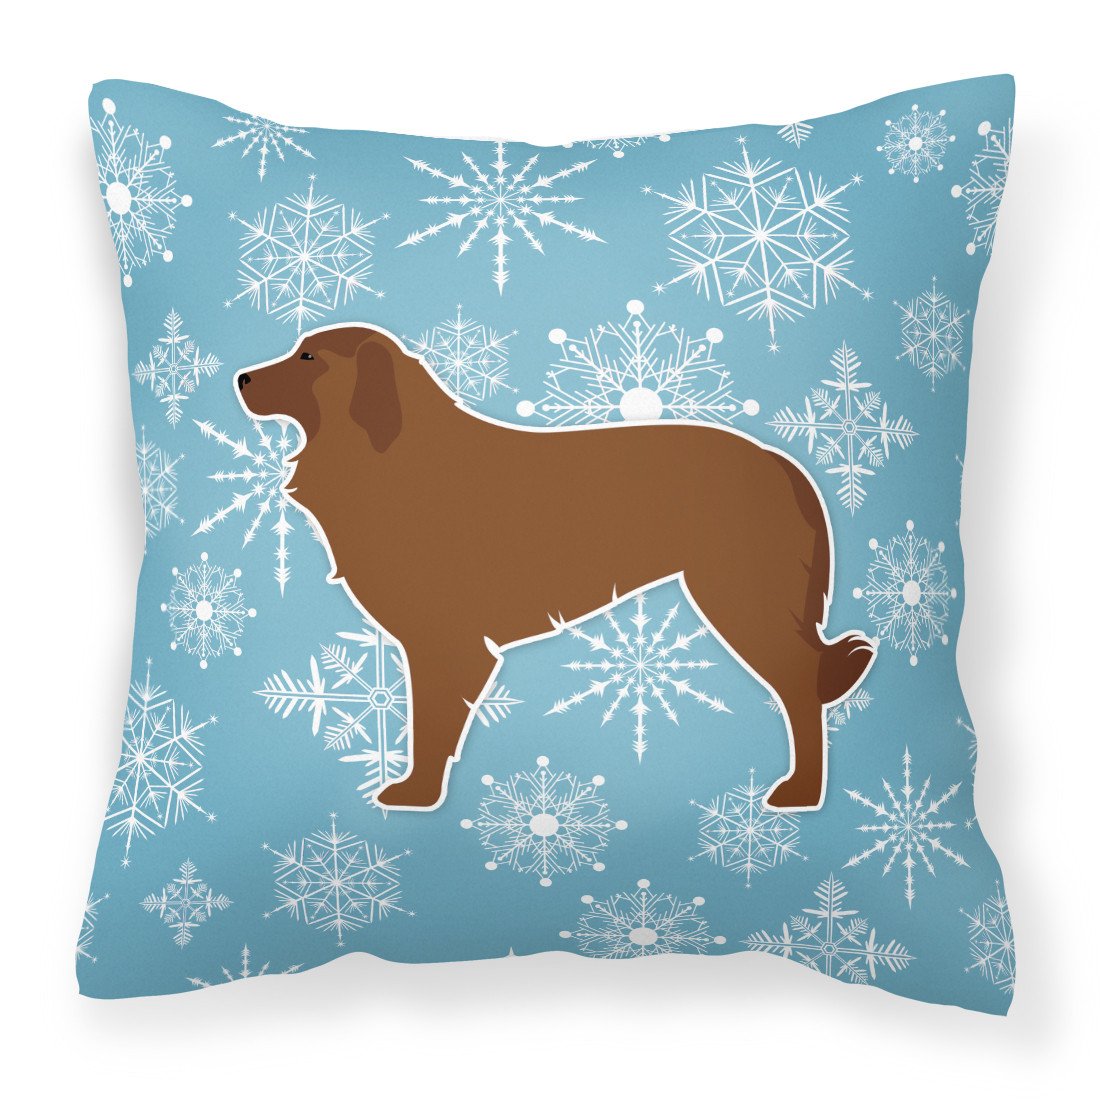 Winter Snowflake Portuguese Sheepdog Dog Fabric Decorative Pillow BB3531PW1818 by Caroline's Treasures